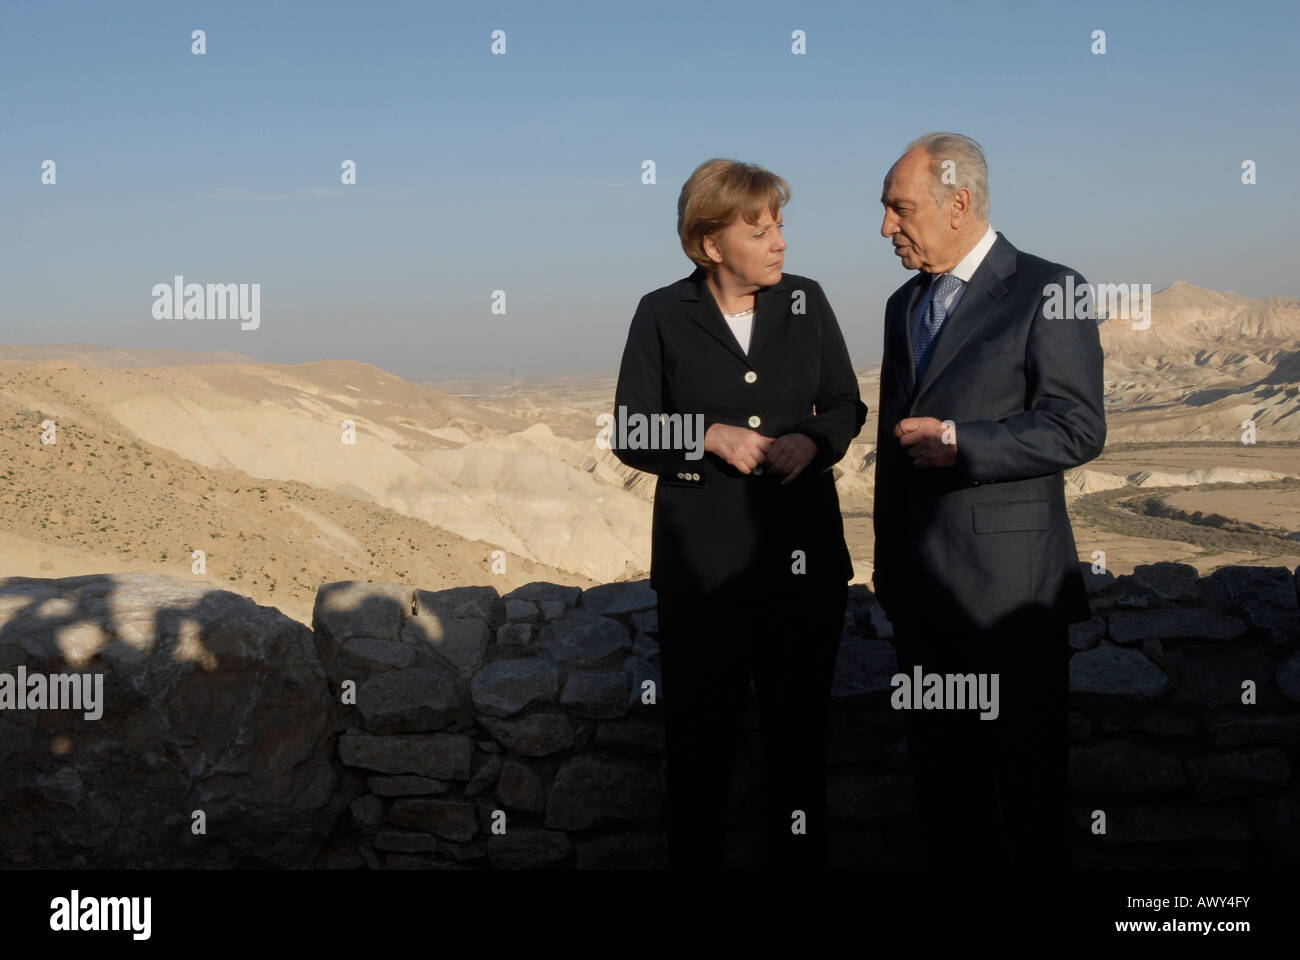 German chancellor Angela Merkel with Israeli president Shimon Peres in the Negev desert, Israel Stock Photo